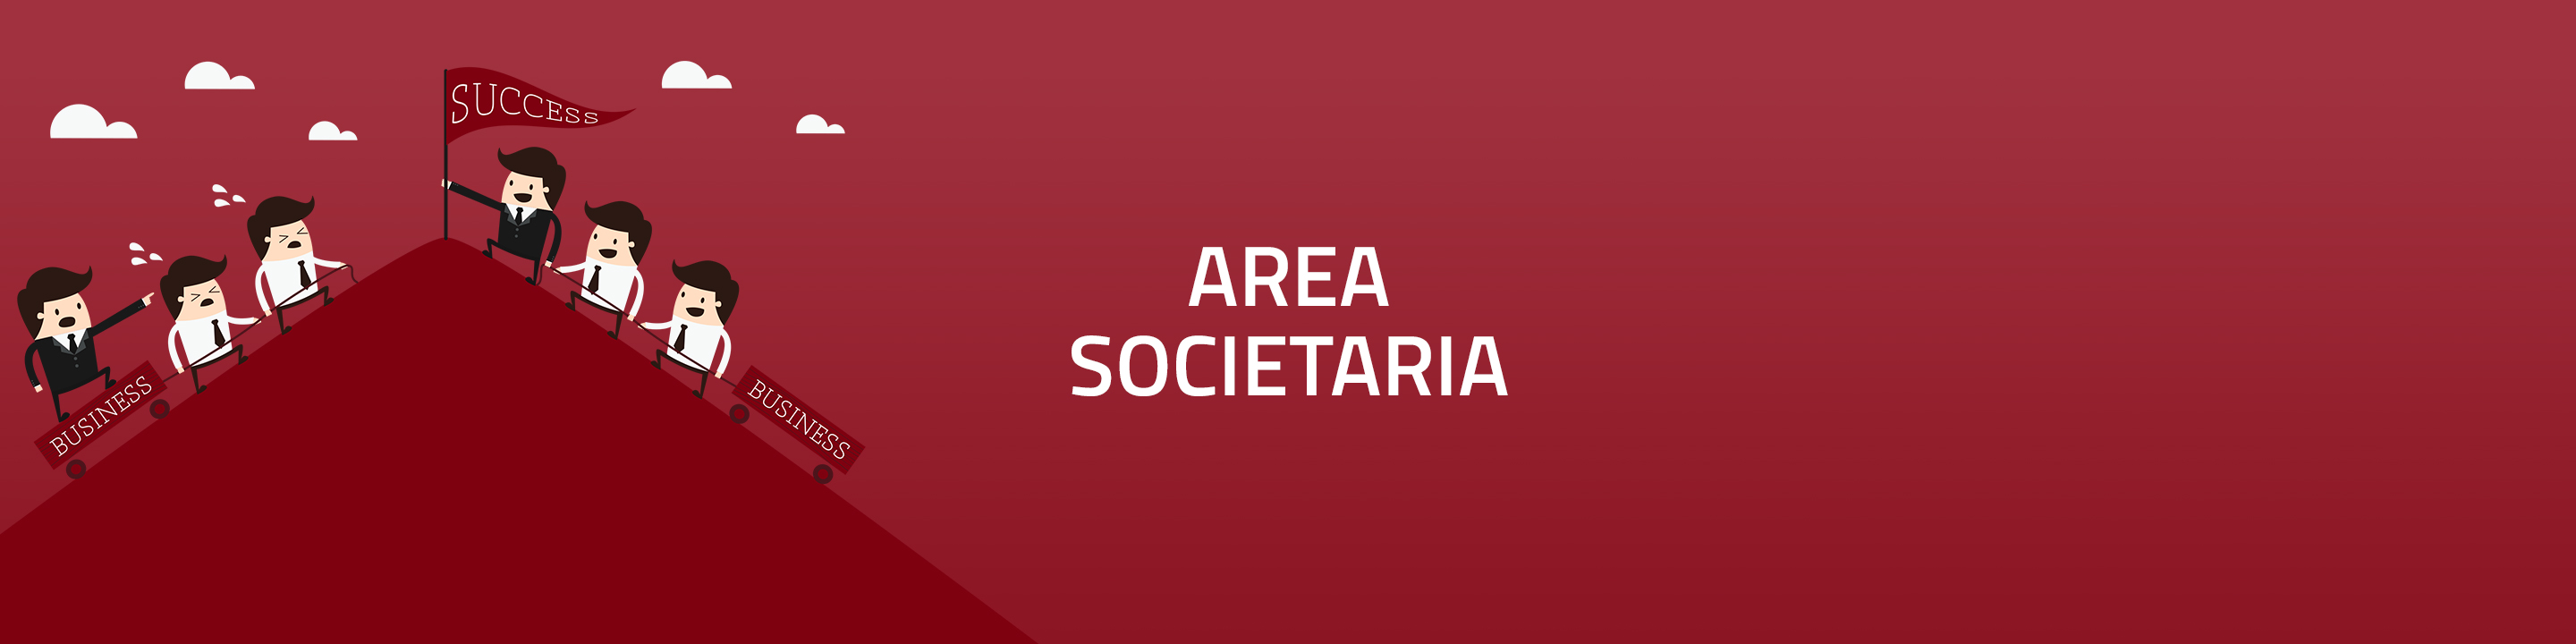 banner-area-societaria